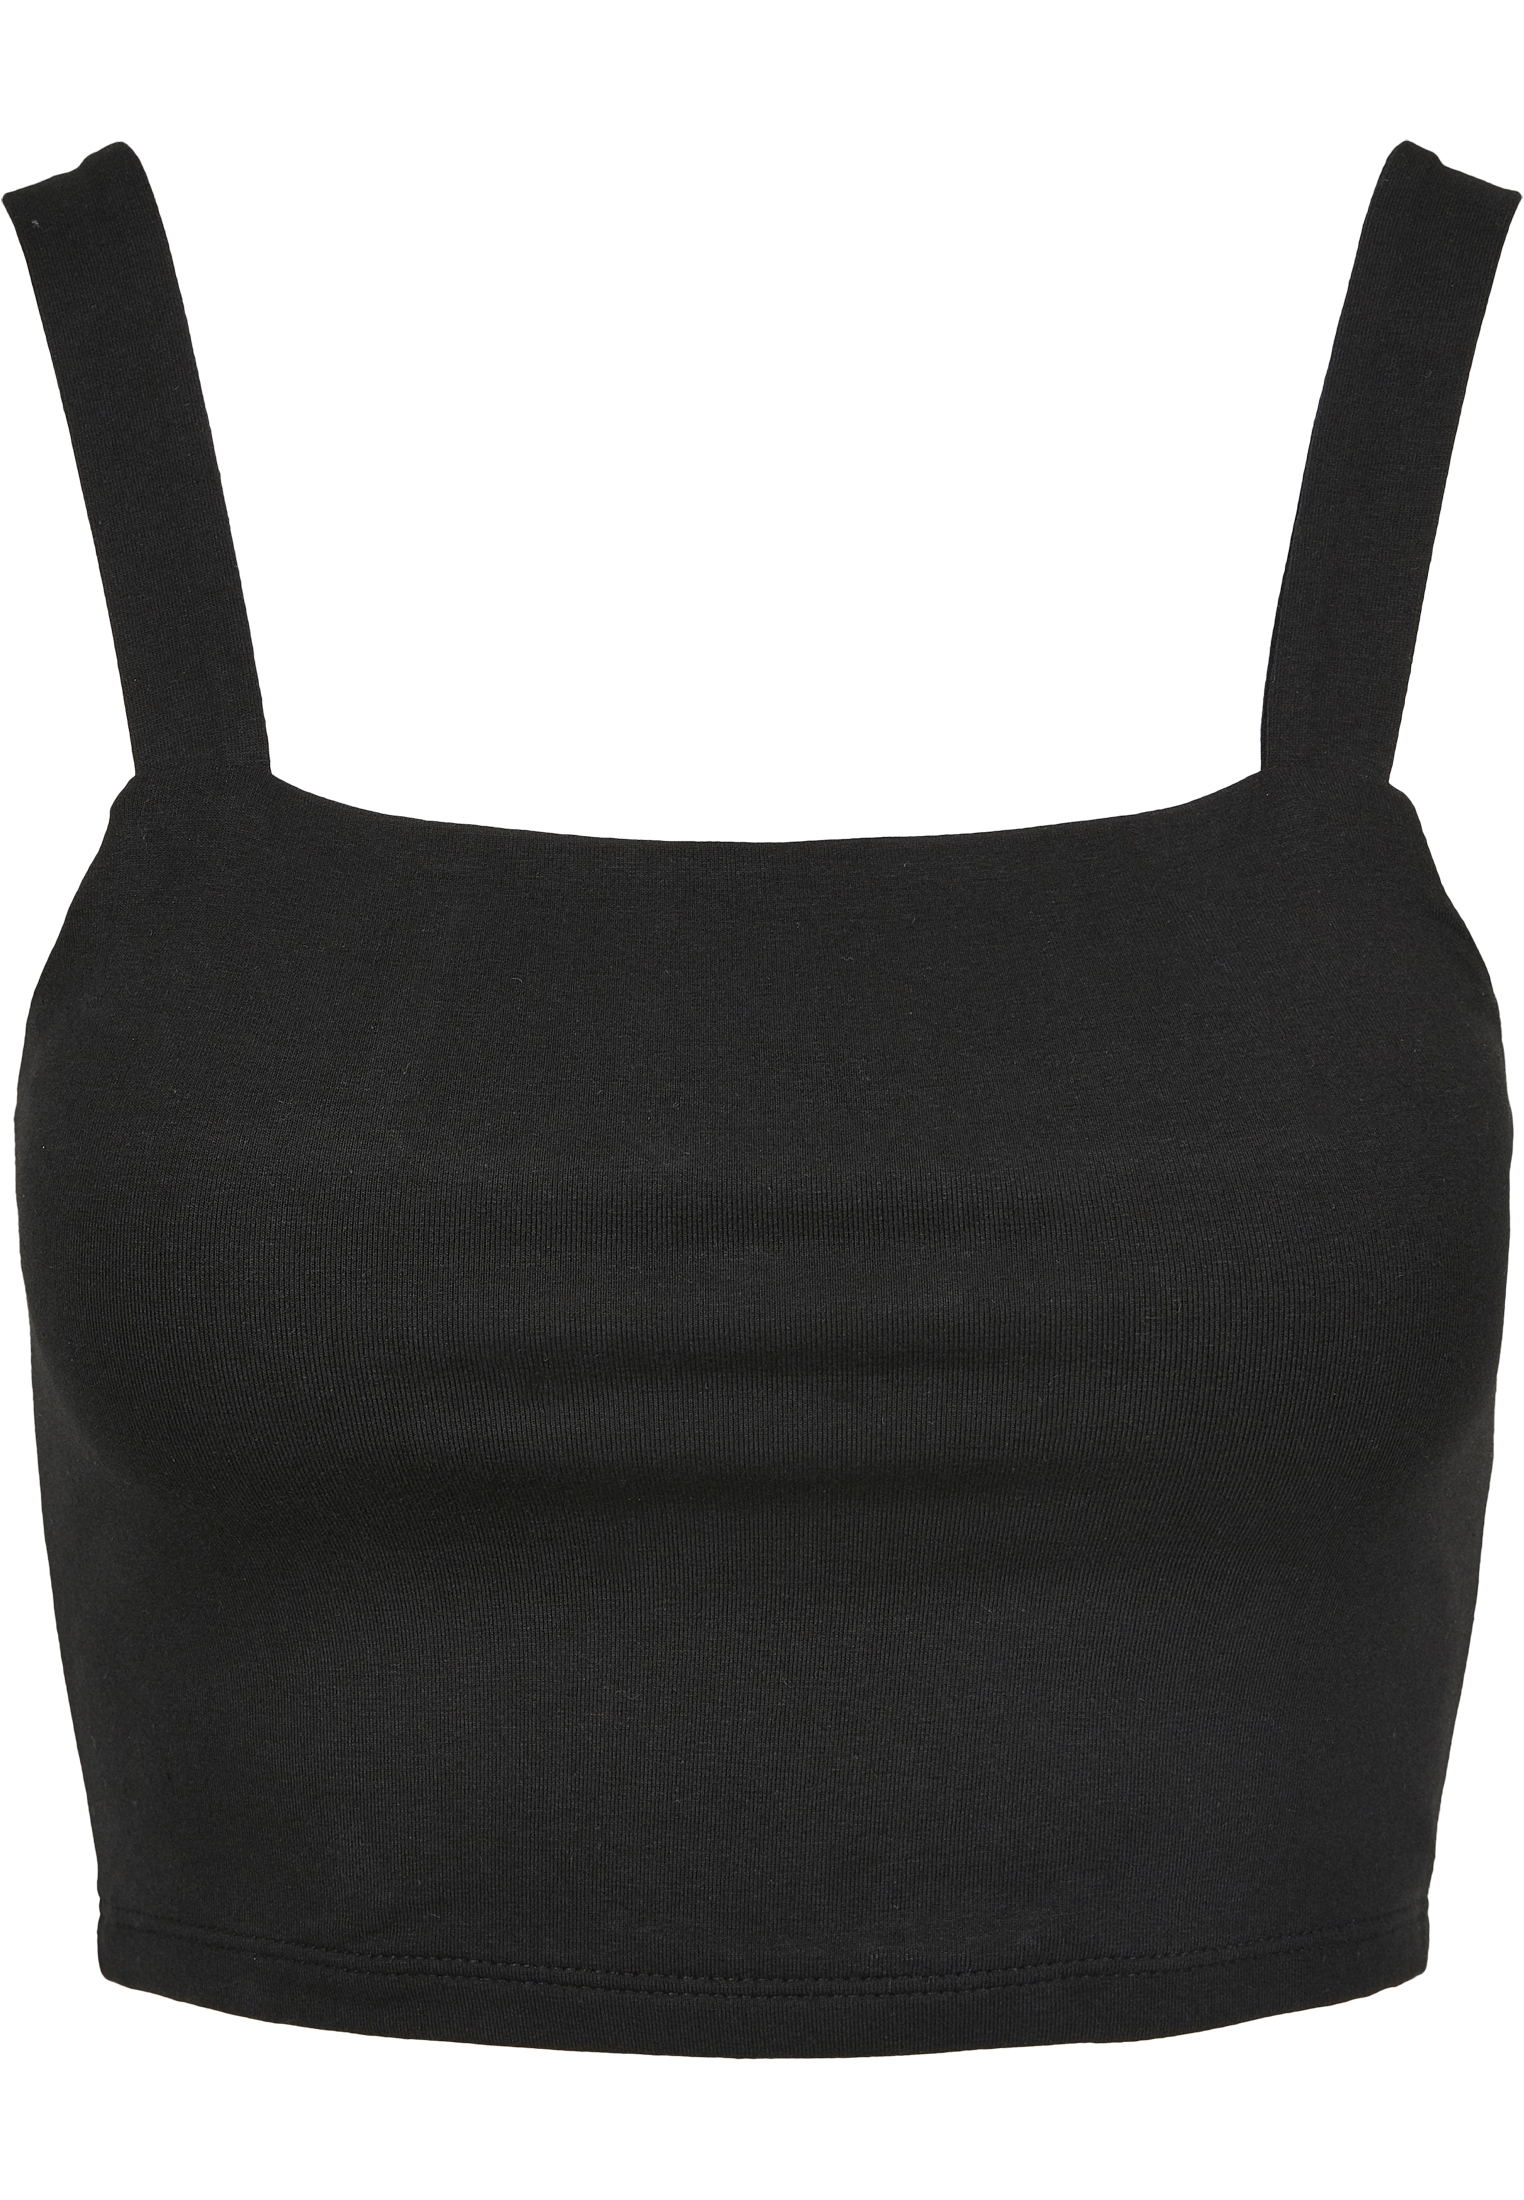 Bekleidung Ladies Cropped Top 2-Pack in Farbe black/white